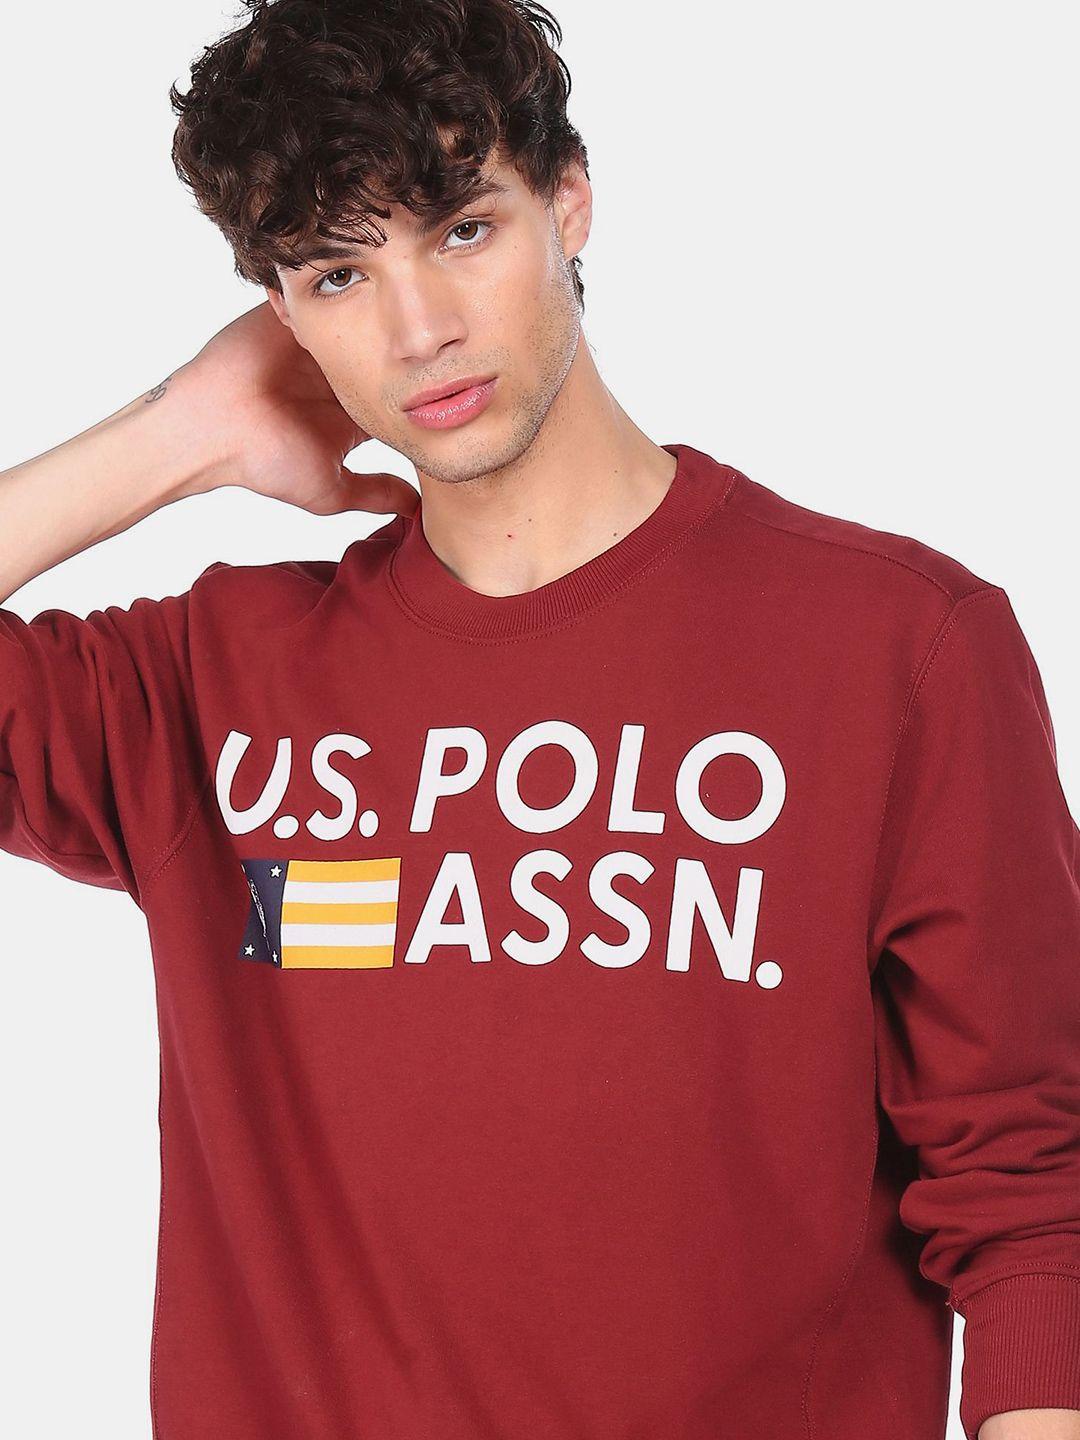 u.s.-polo-assn.-denim-co.-men-red-printed-crew-neck-sweatshirt